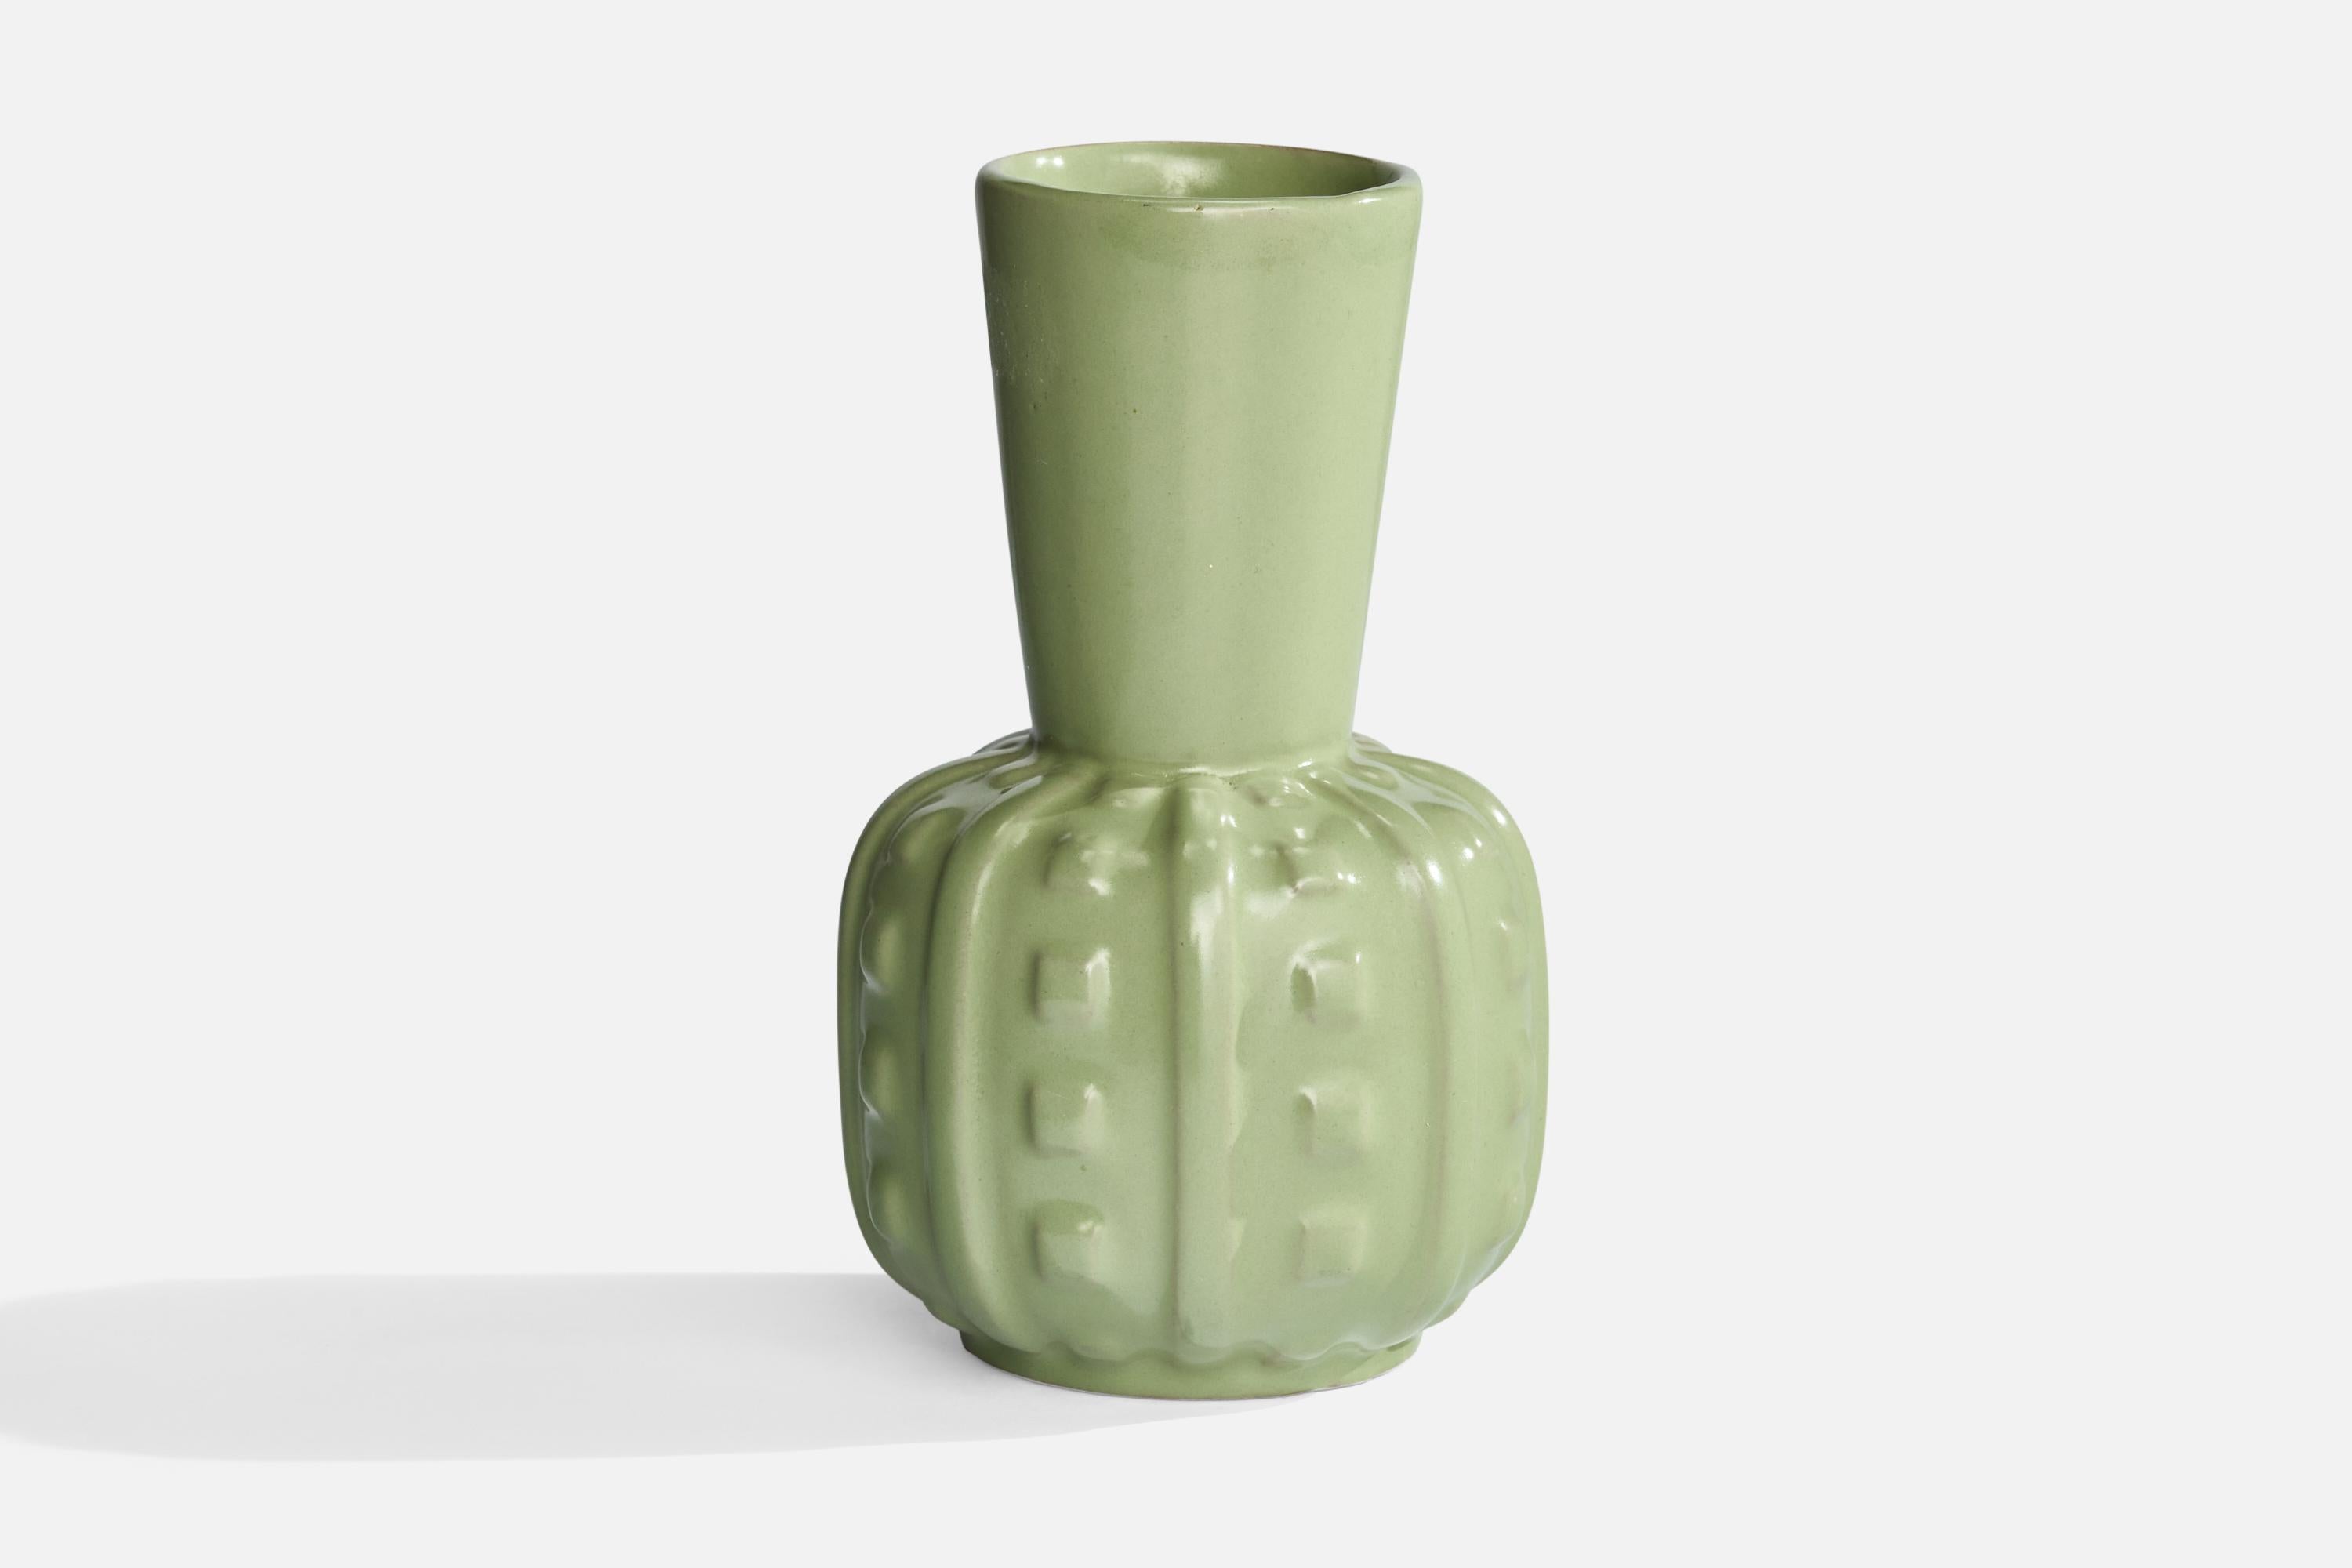 A green-glazed earthenware vase designed and produced by Upsala Ekeby, Sweden, 1930s.